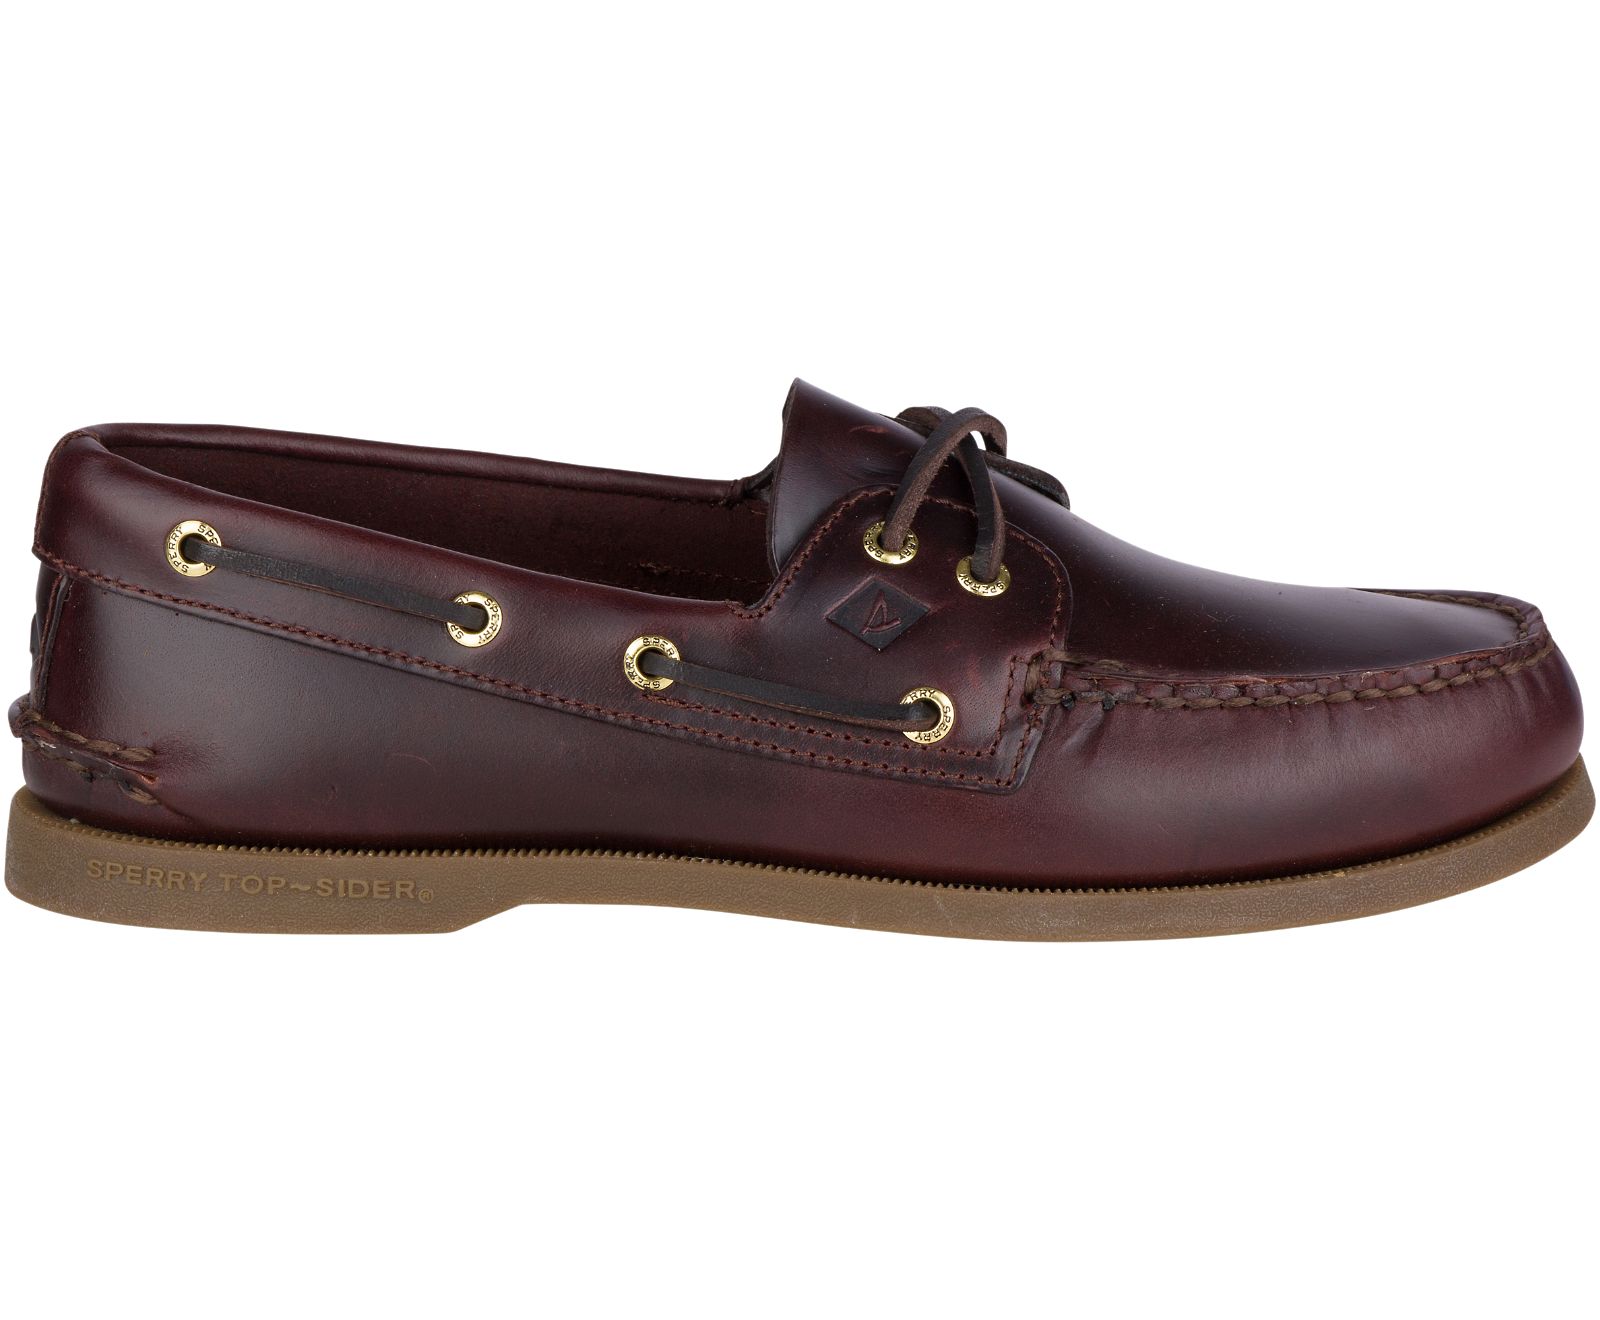 Men's Authentic Original Leather Boat Shoe - Amaretto